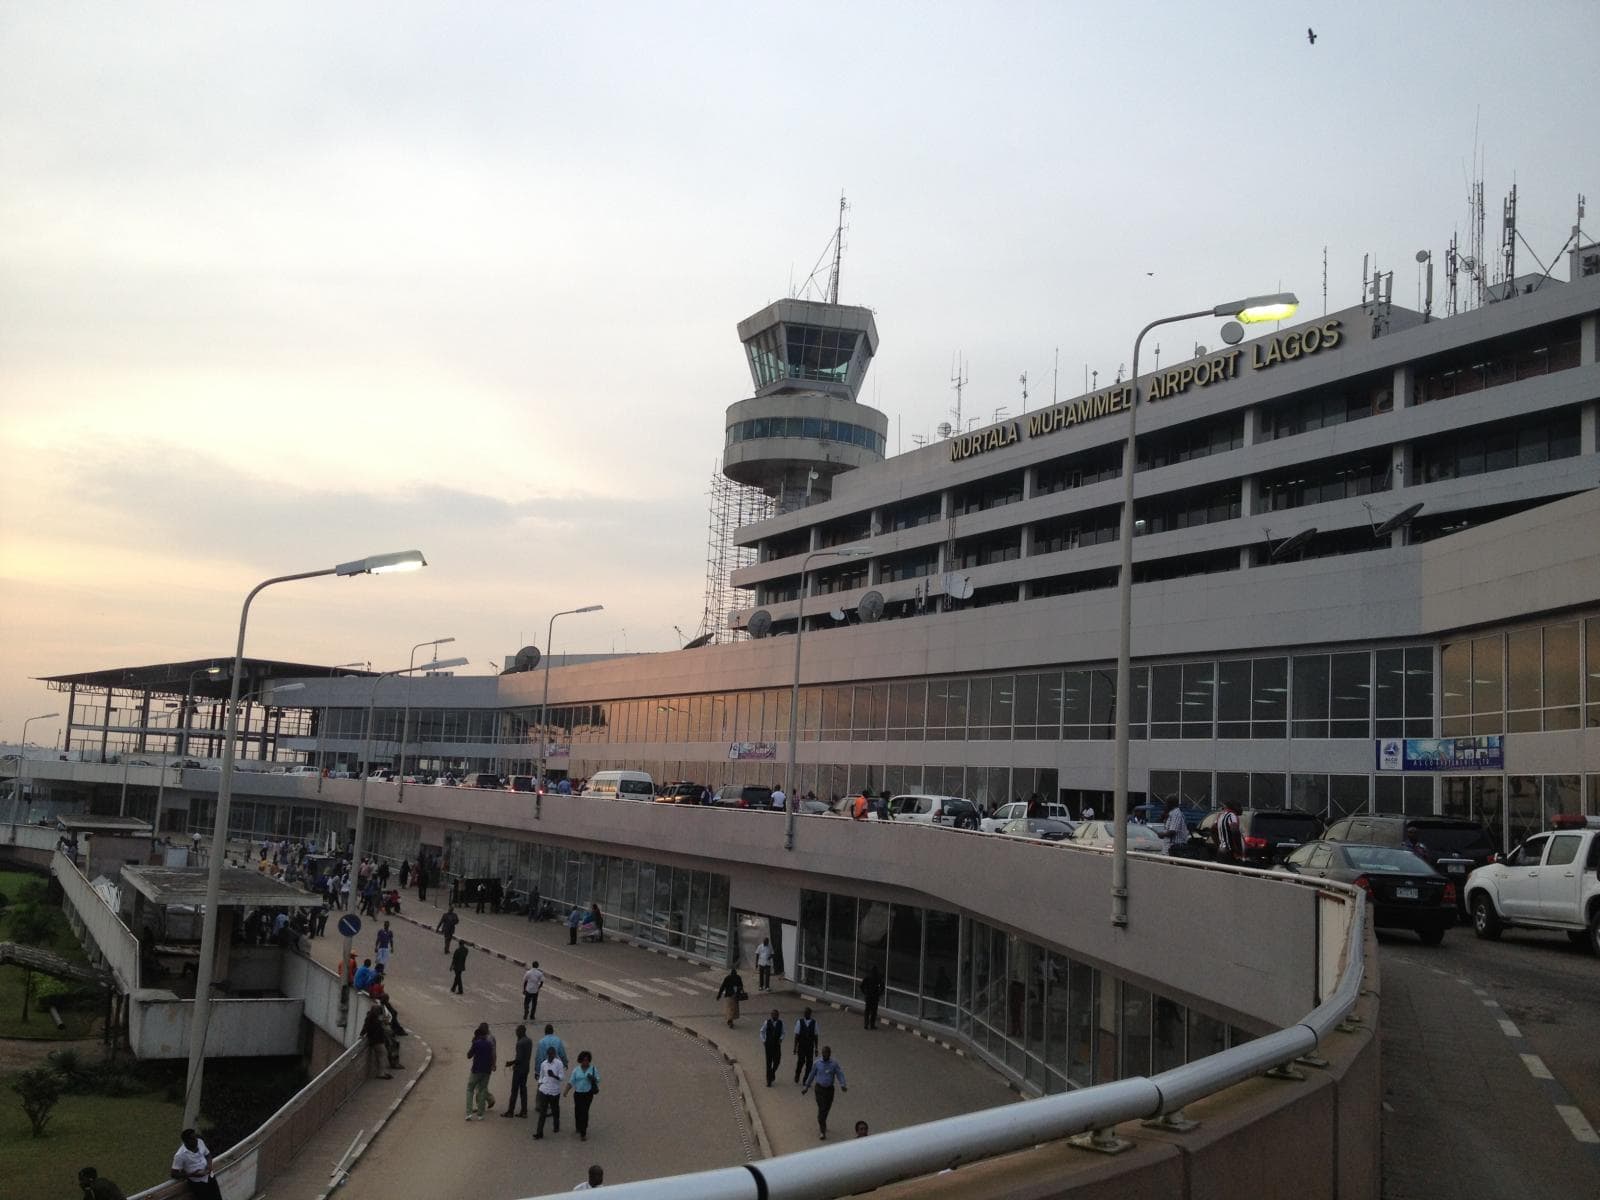 Murtala Muhammed Airport, Lagos